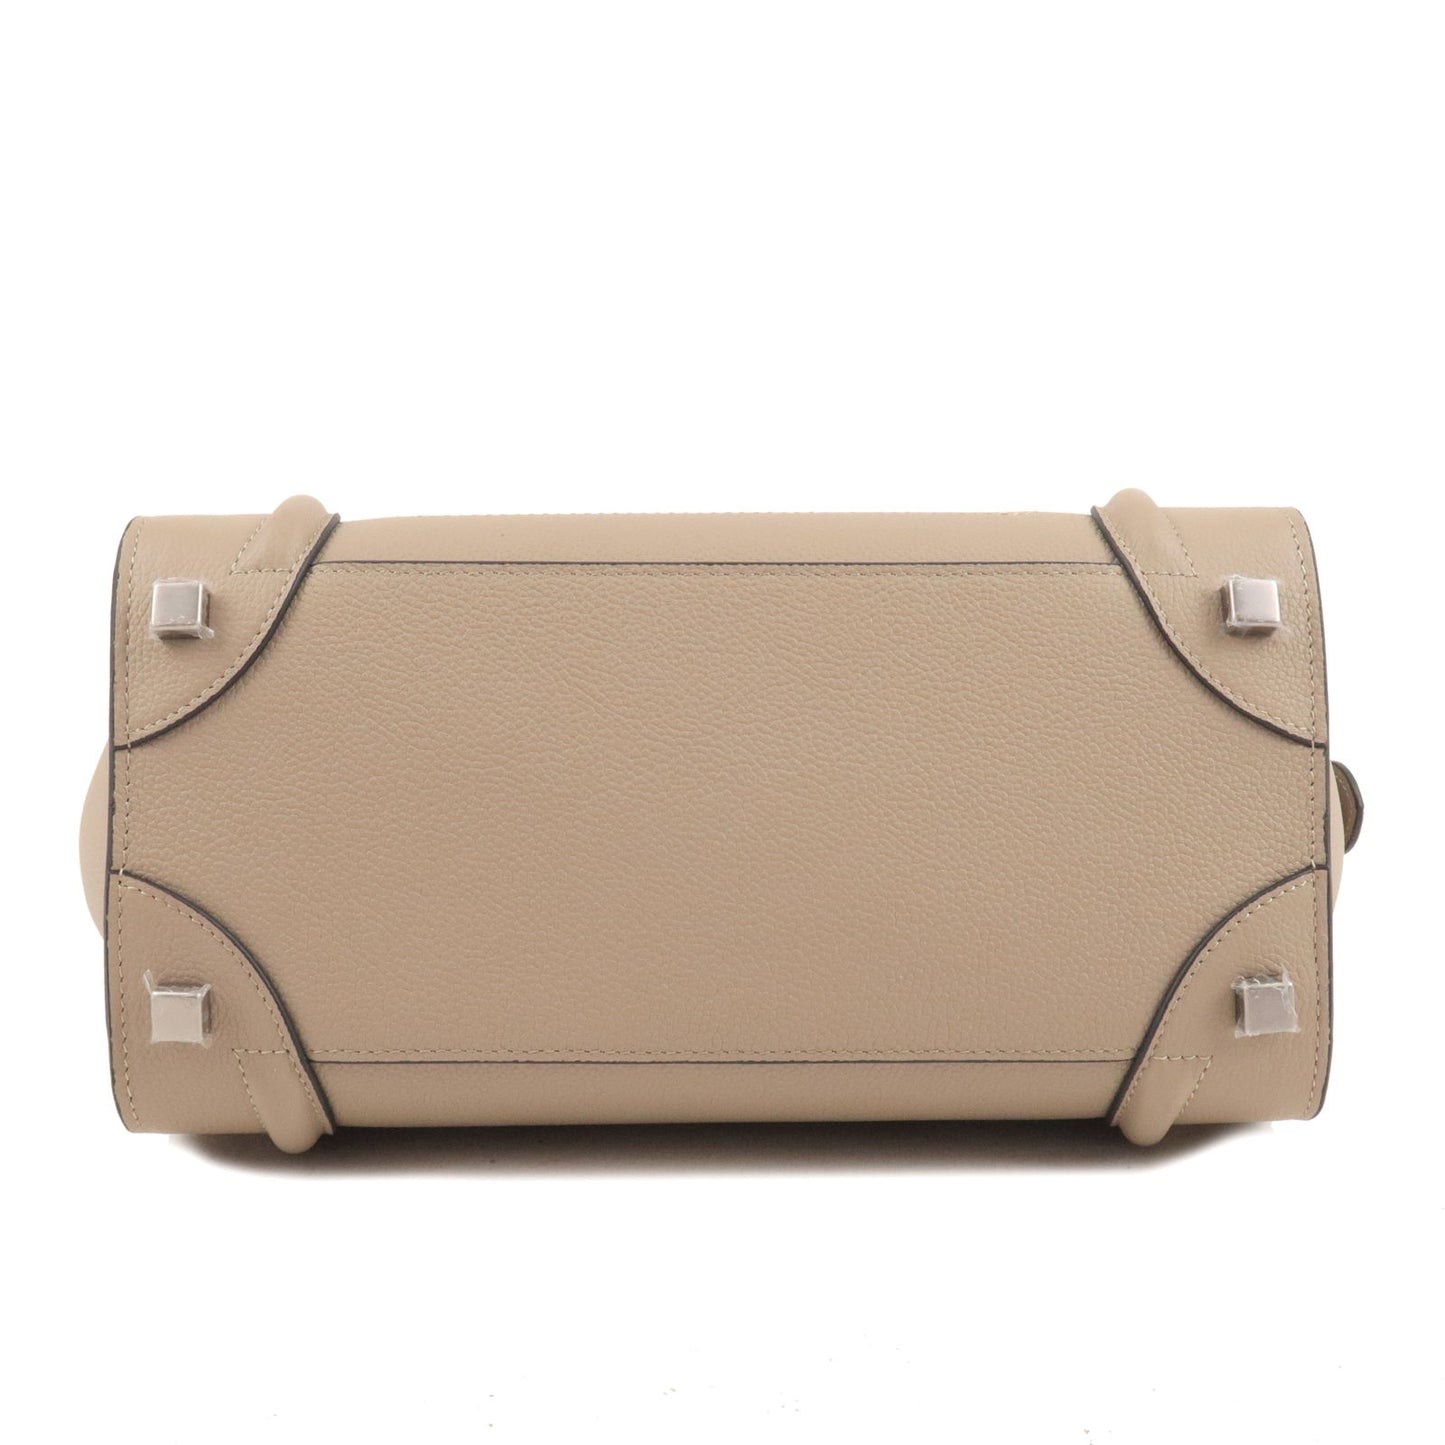 CELINE Luggage Micro Shopper Leather Hand Bag Beige 167793